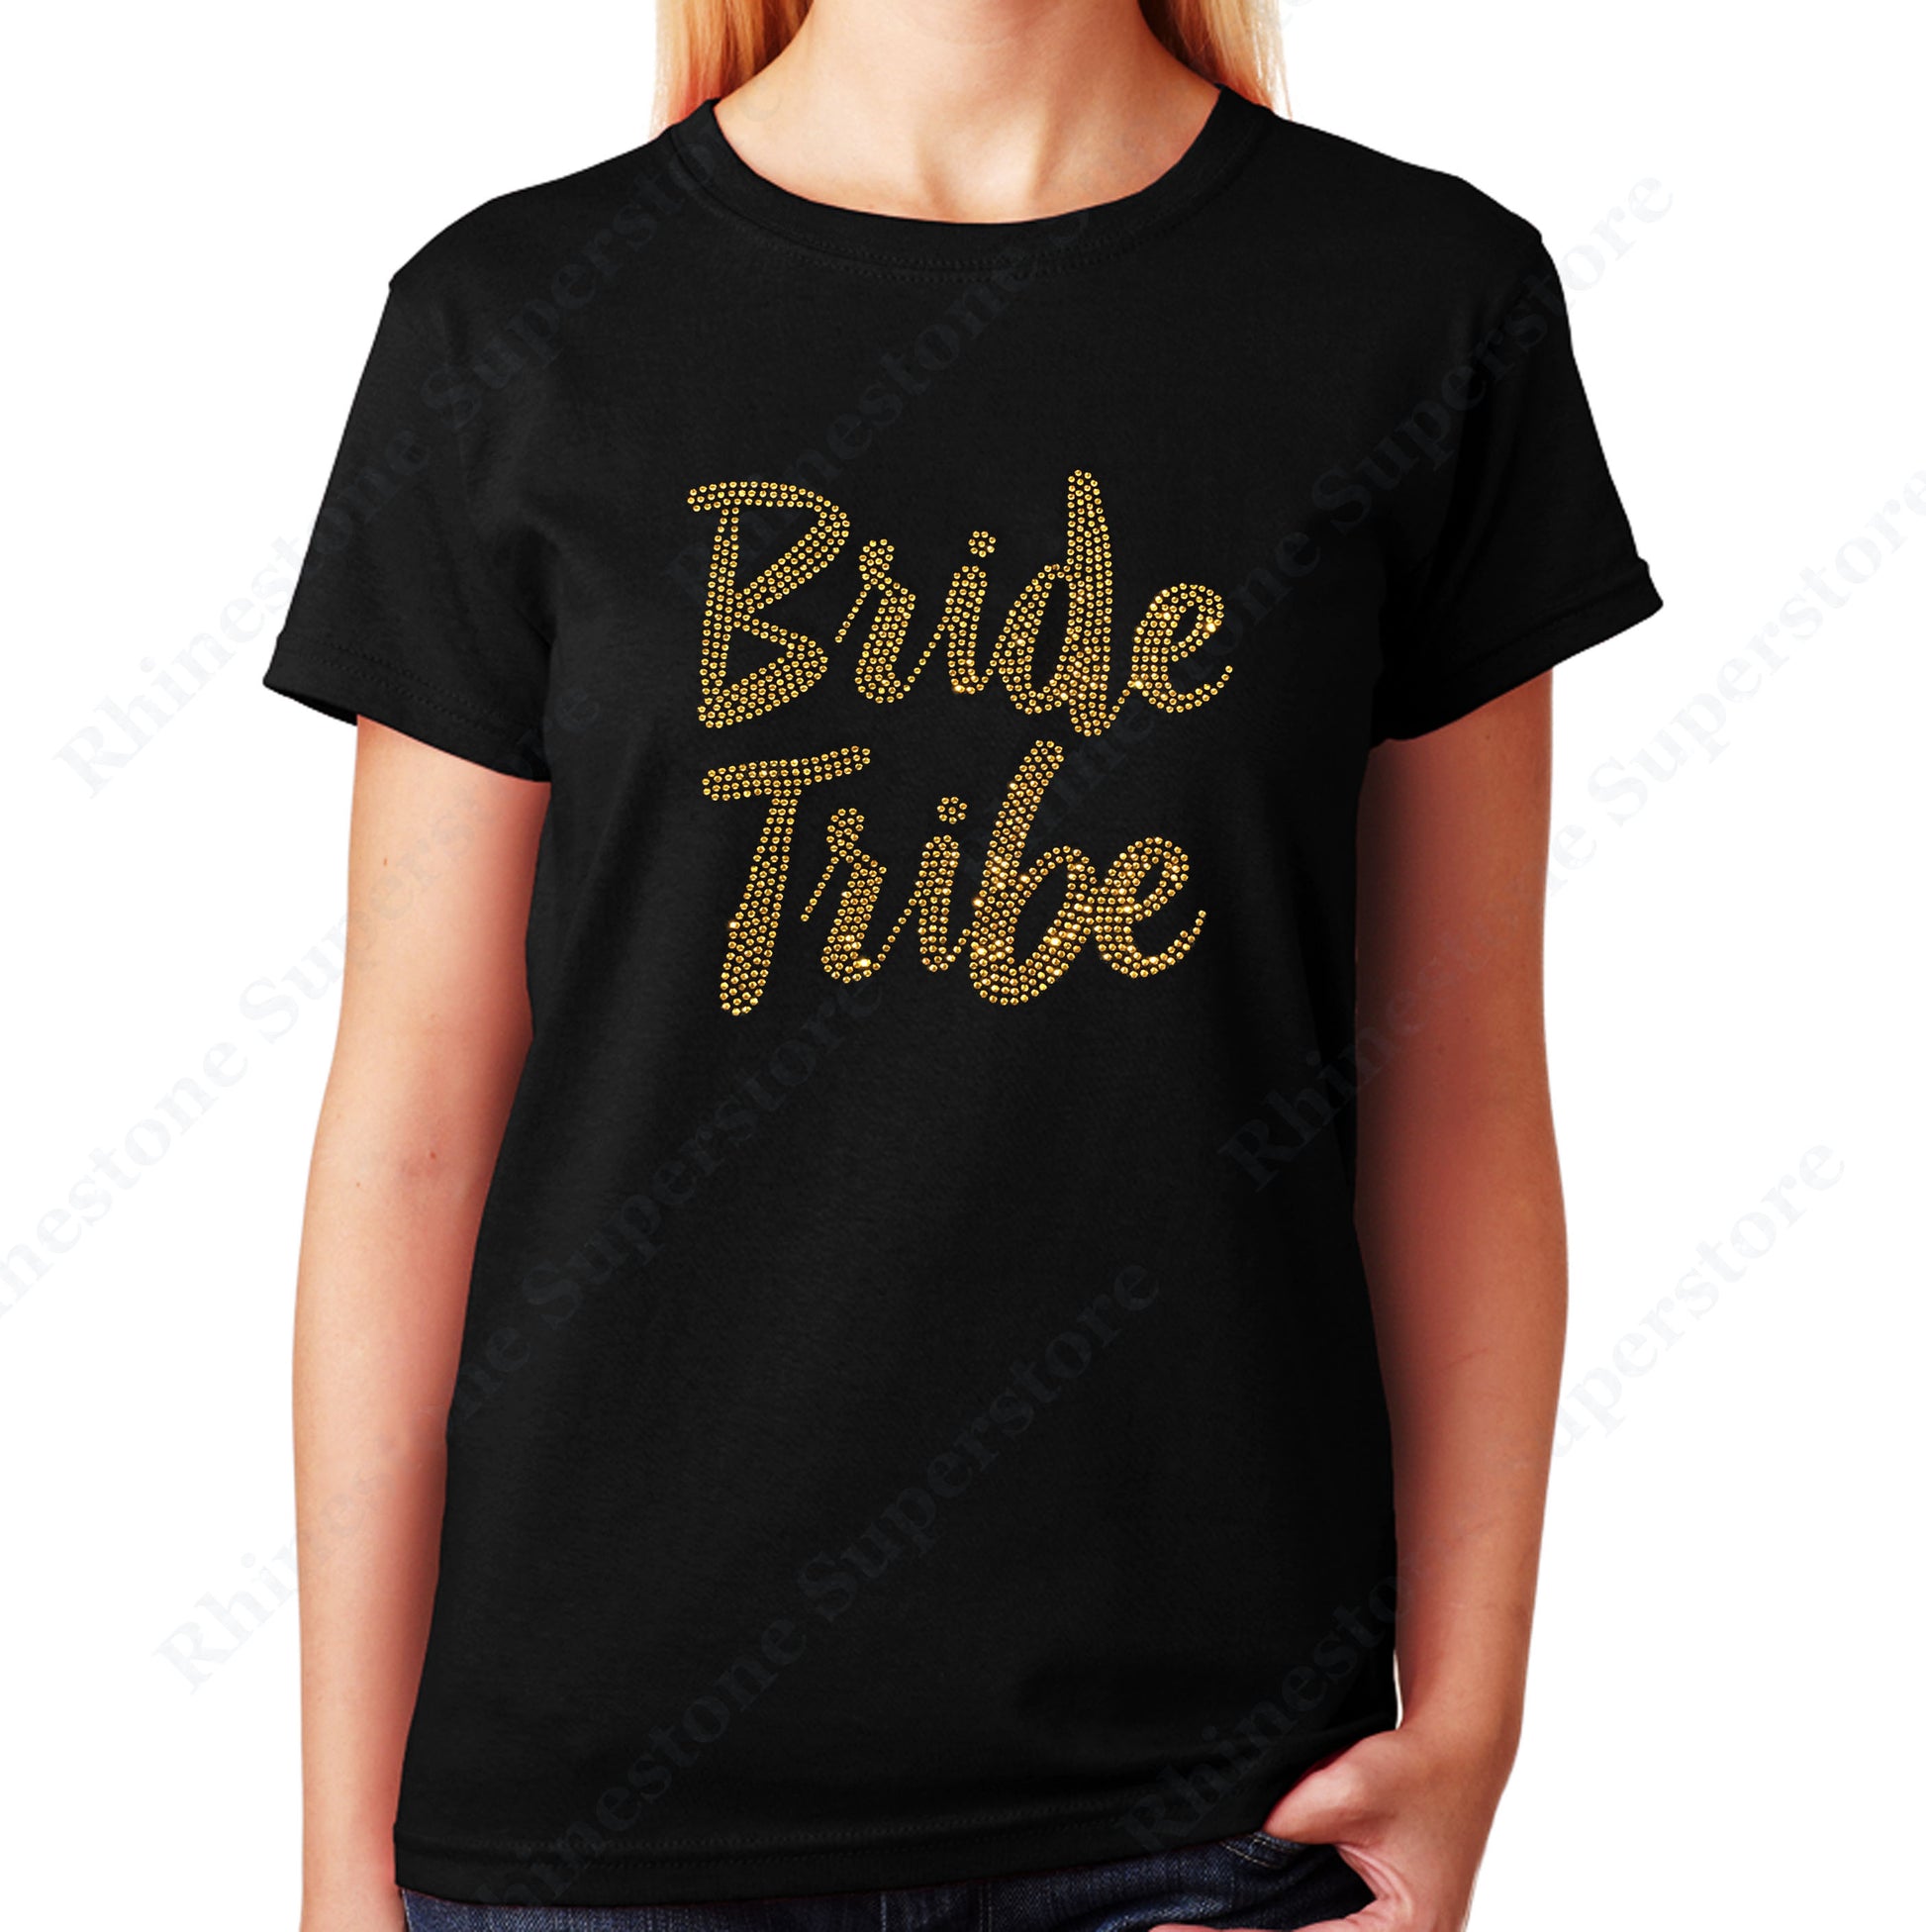 Gold Bride Tribe in Rhinestones